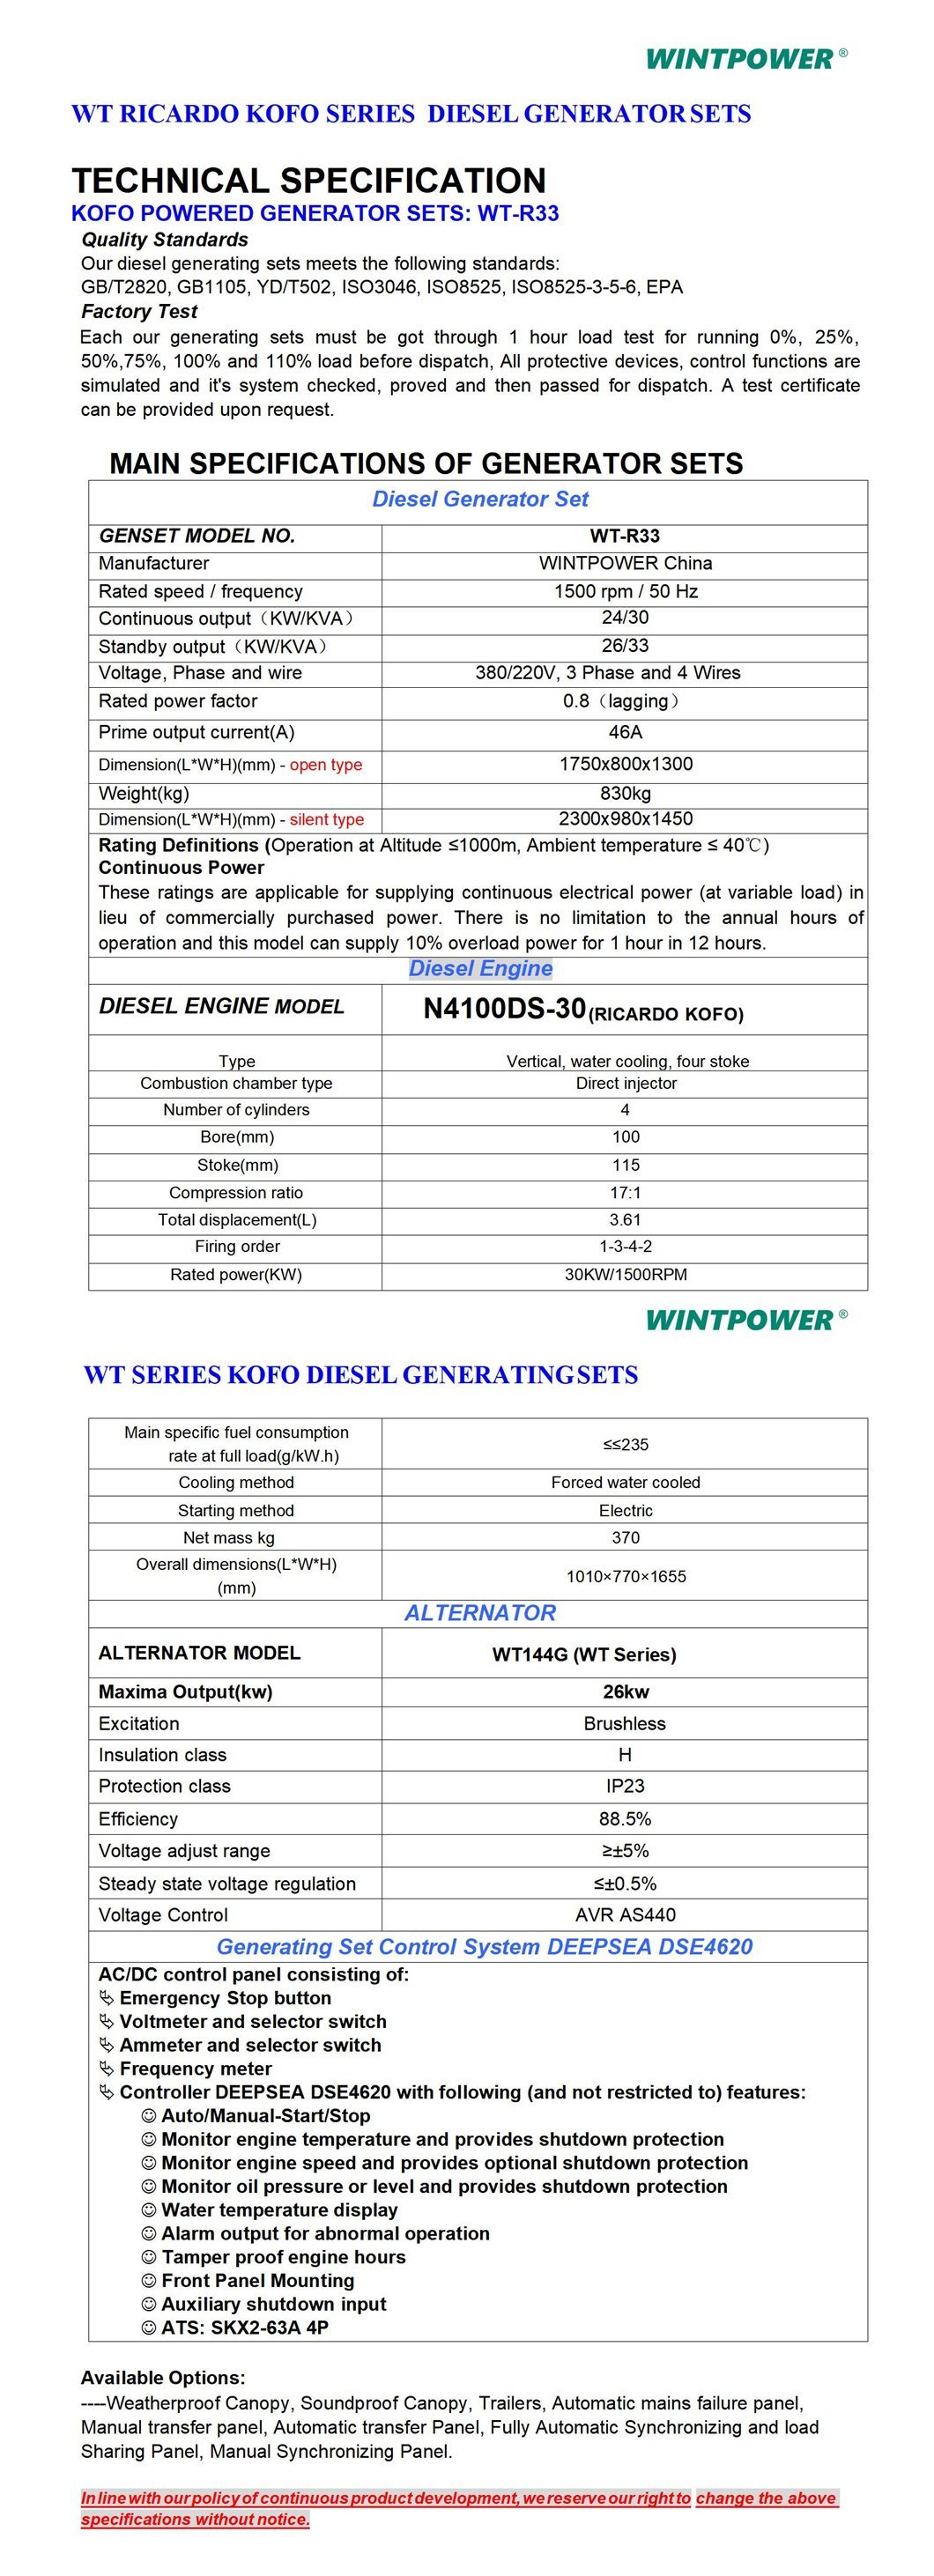 Grupo electrógeno Weichai Kofo Ricardo Motor diésel DG Genset 30kVA N4100ds-30 Tipo silencioso insonorizado 400/230V 380/220V 208/110V 440V 480V 600V 50Hz 60Hz